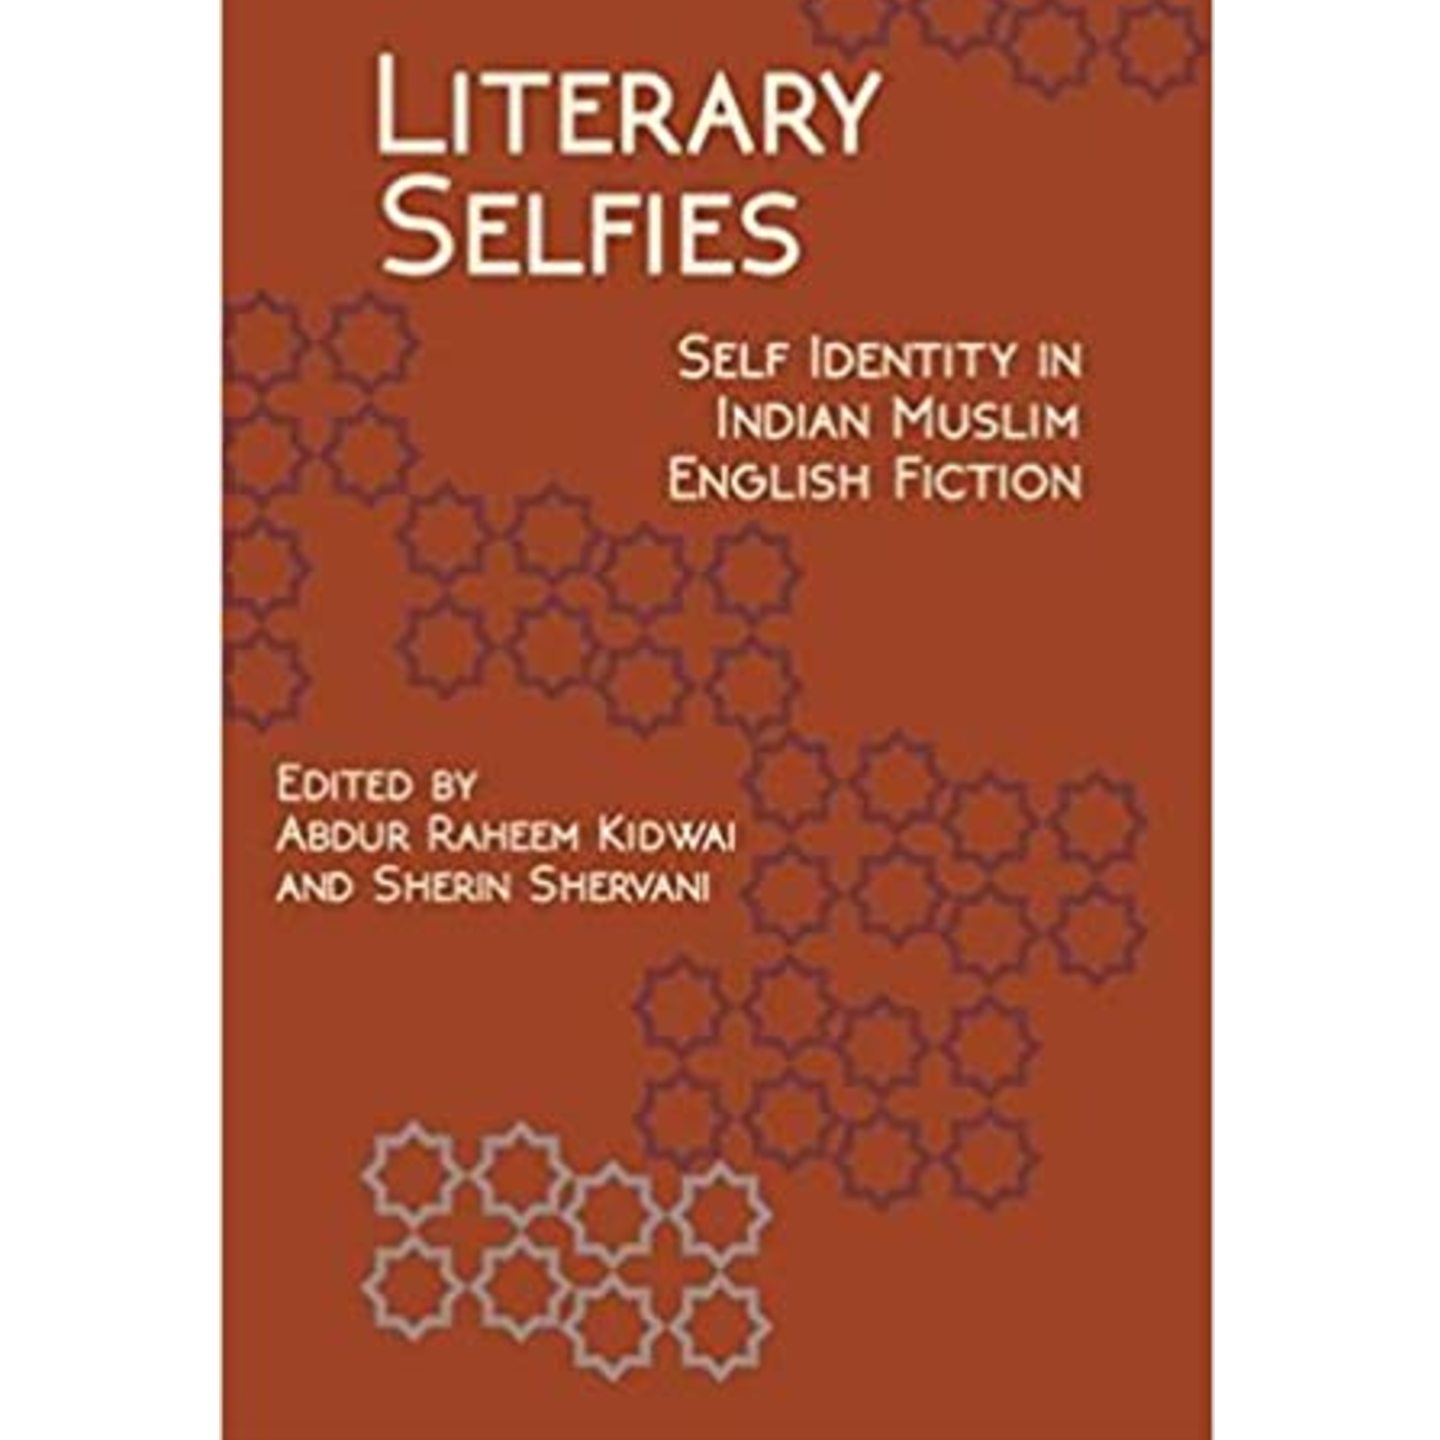 Literary Selfies Self-Identity in Indian Muslim English Fiction by Abdur Raheem Kidwai and Sherin Shervani